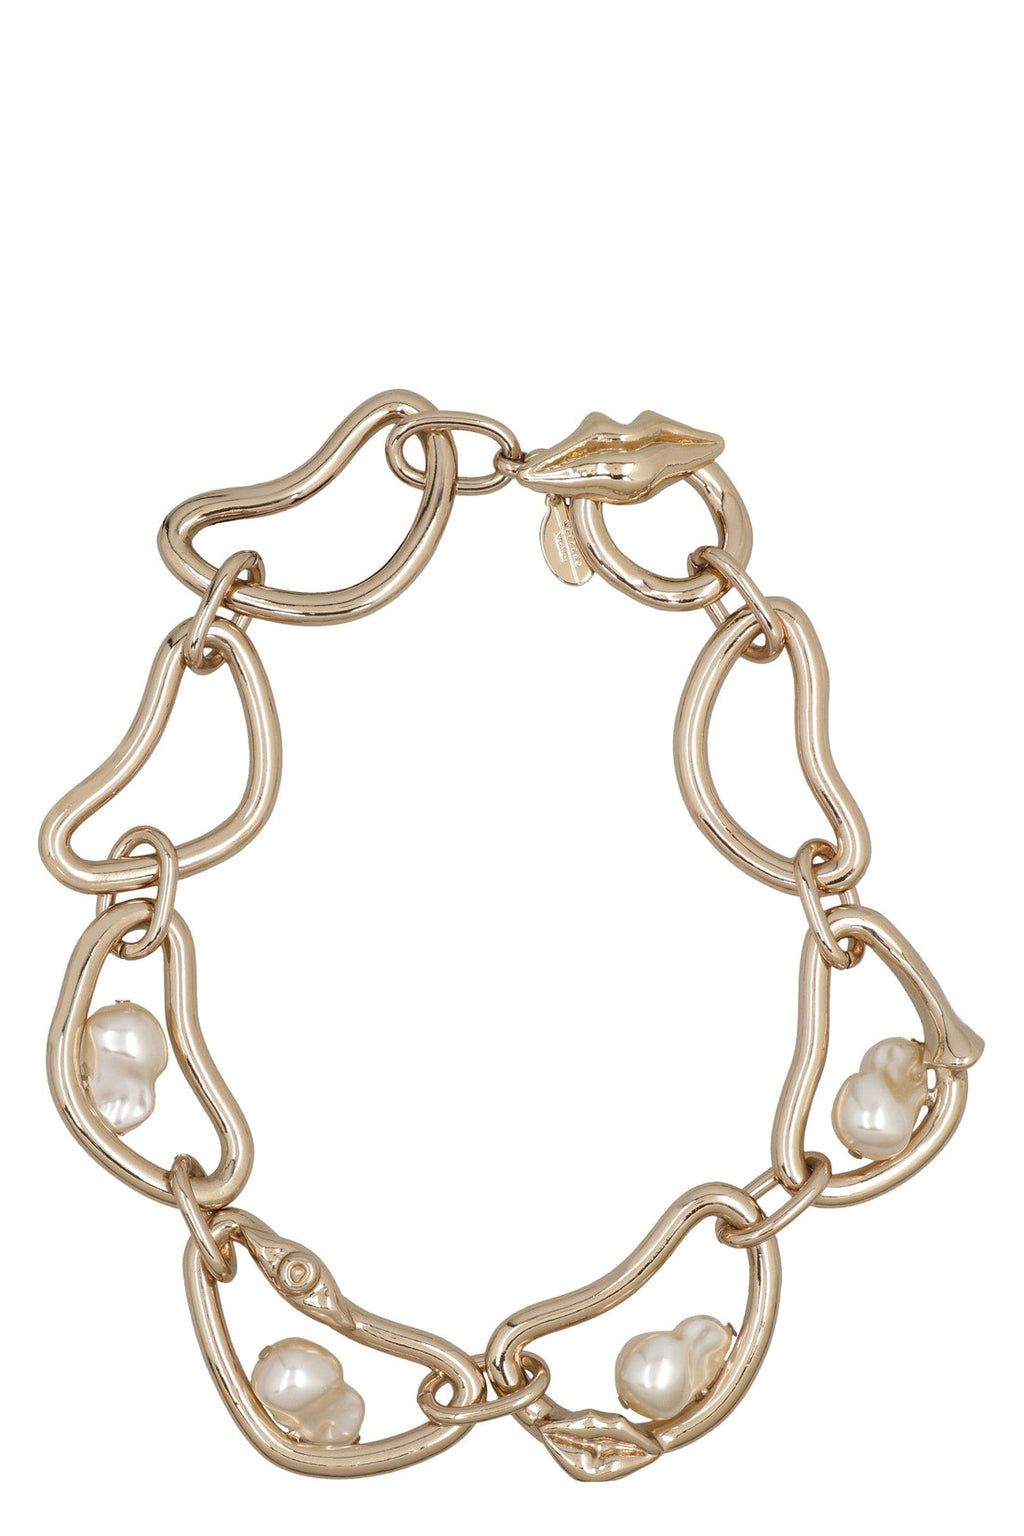 Max Mara-OUTLET-SALE-Cupola necklace-ARCHIVIST